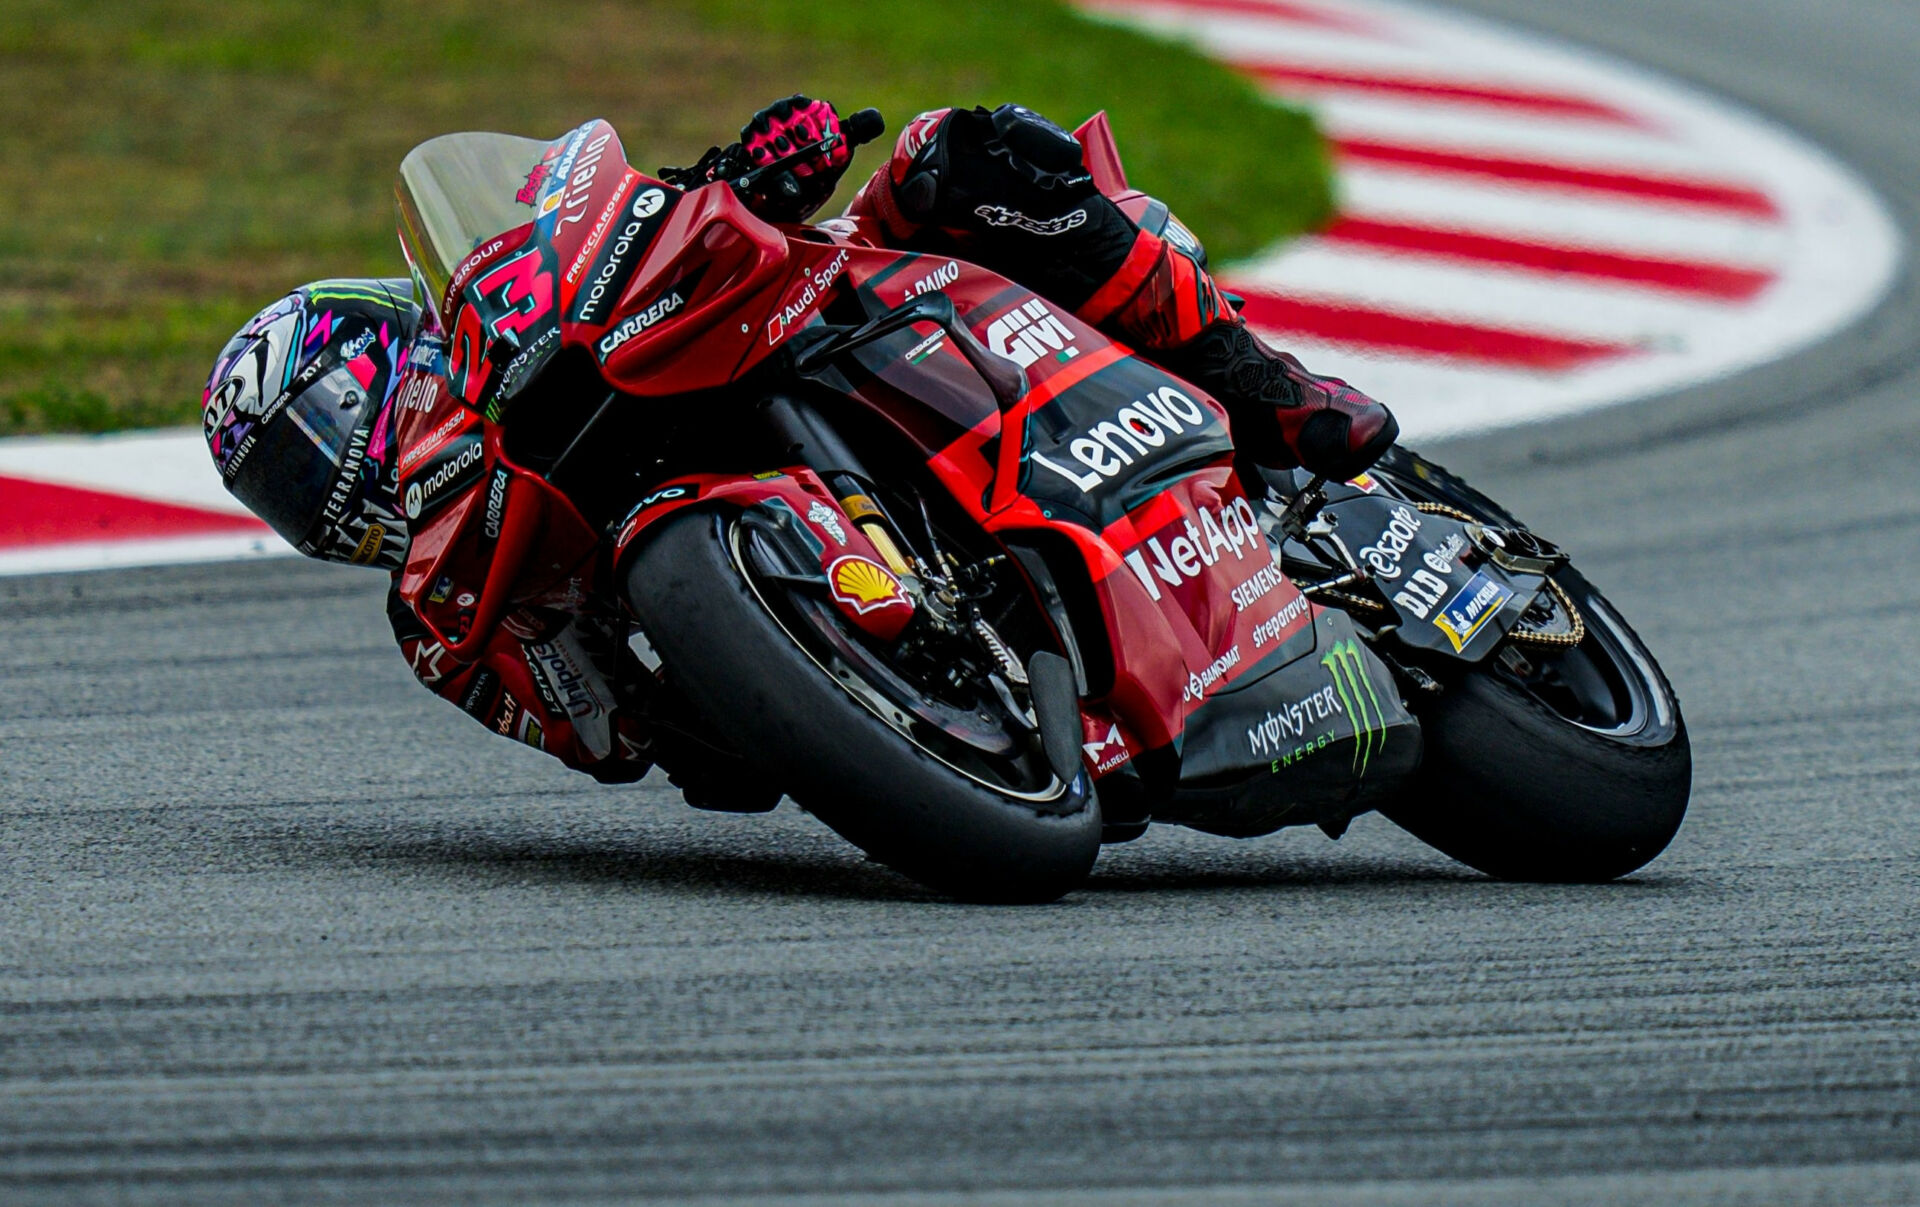 Enea Bastianini (23) in action at Catalunya, before his crash. Photo courtesy Ducati.